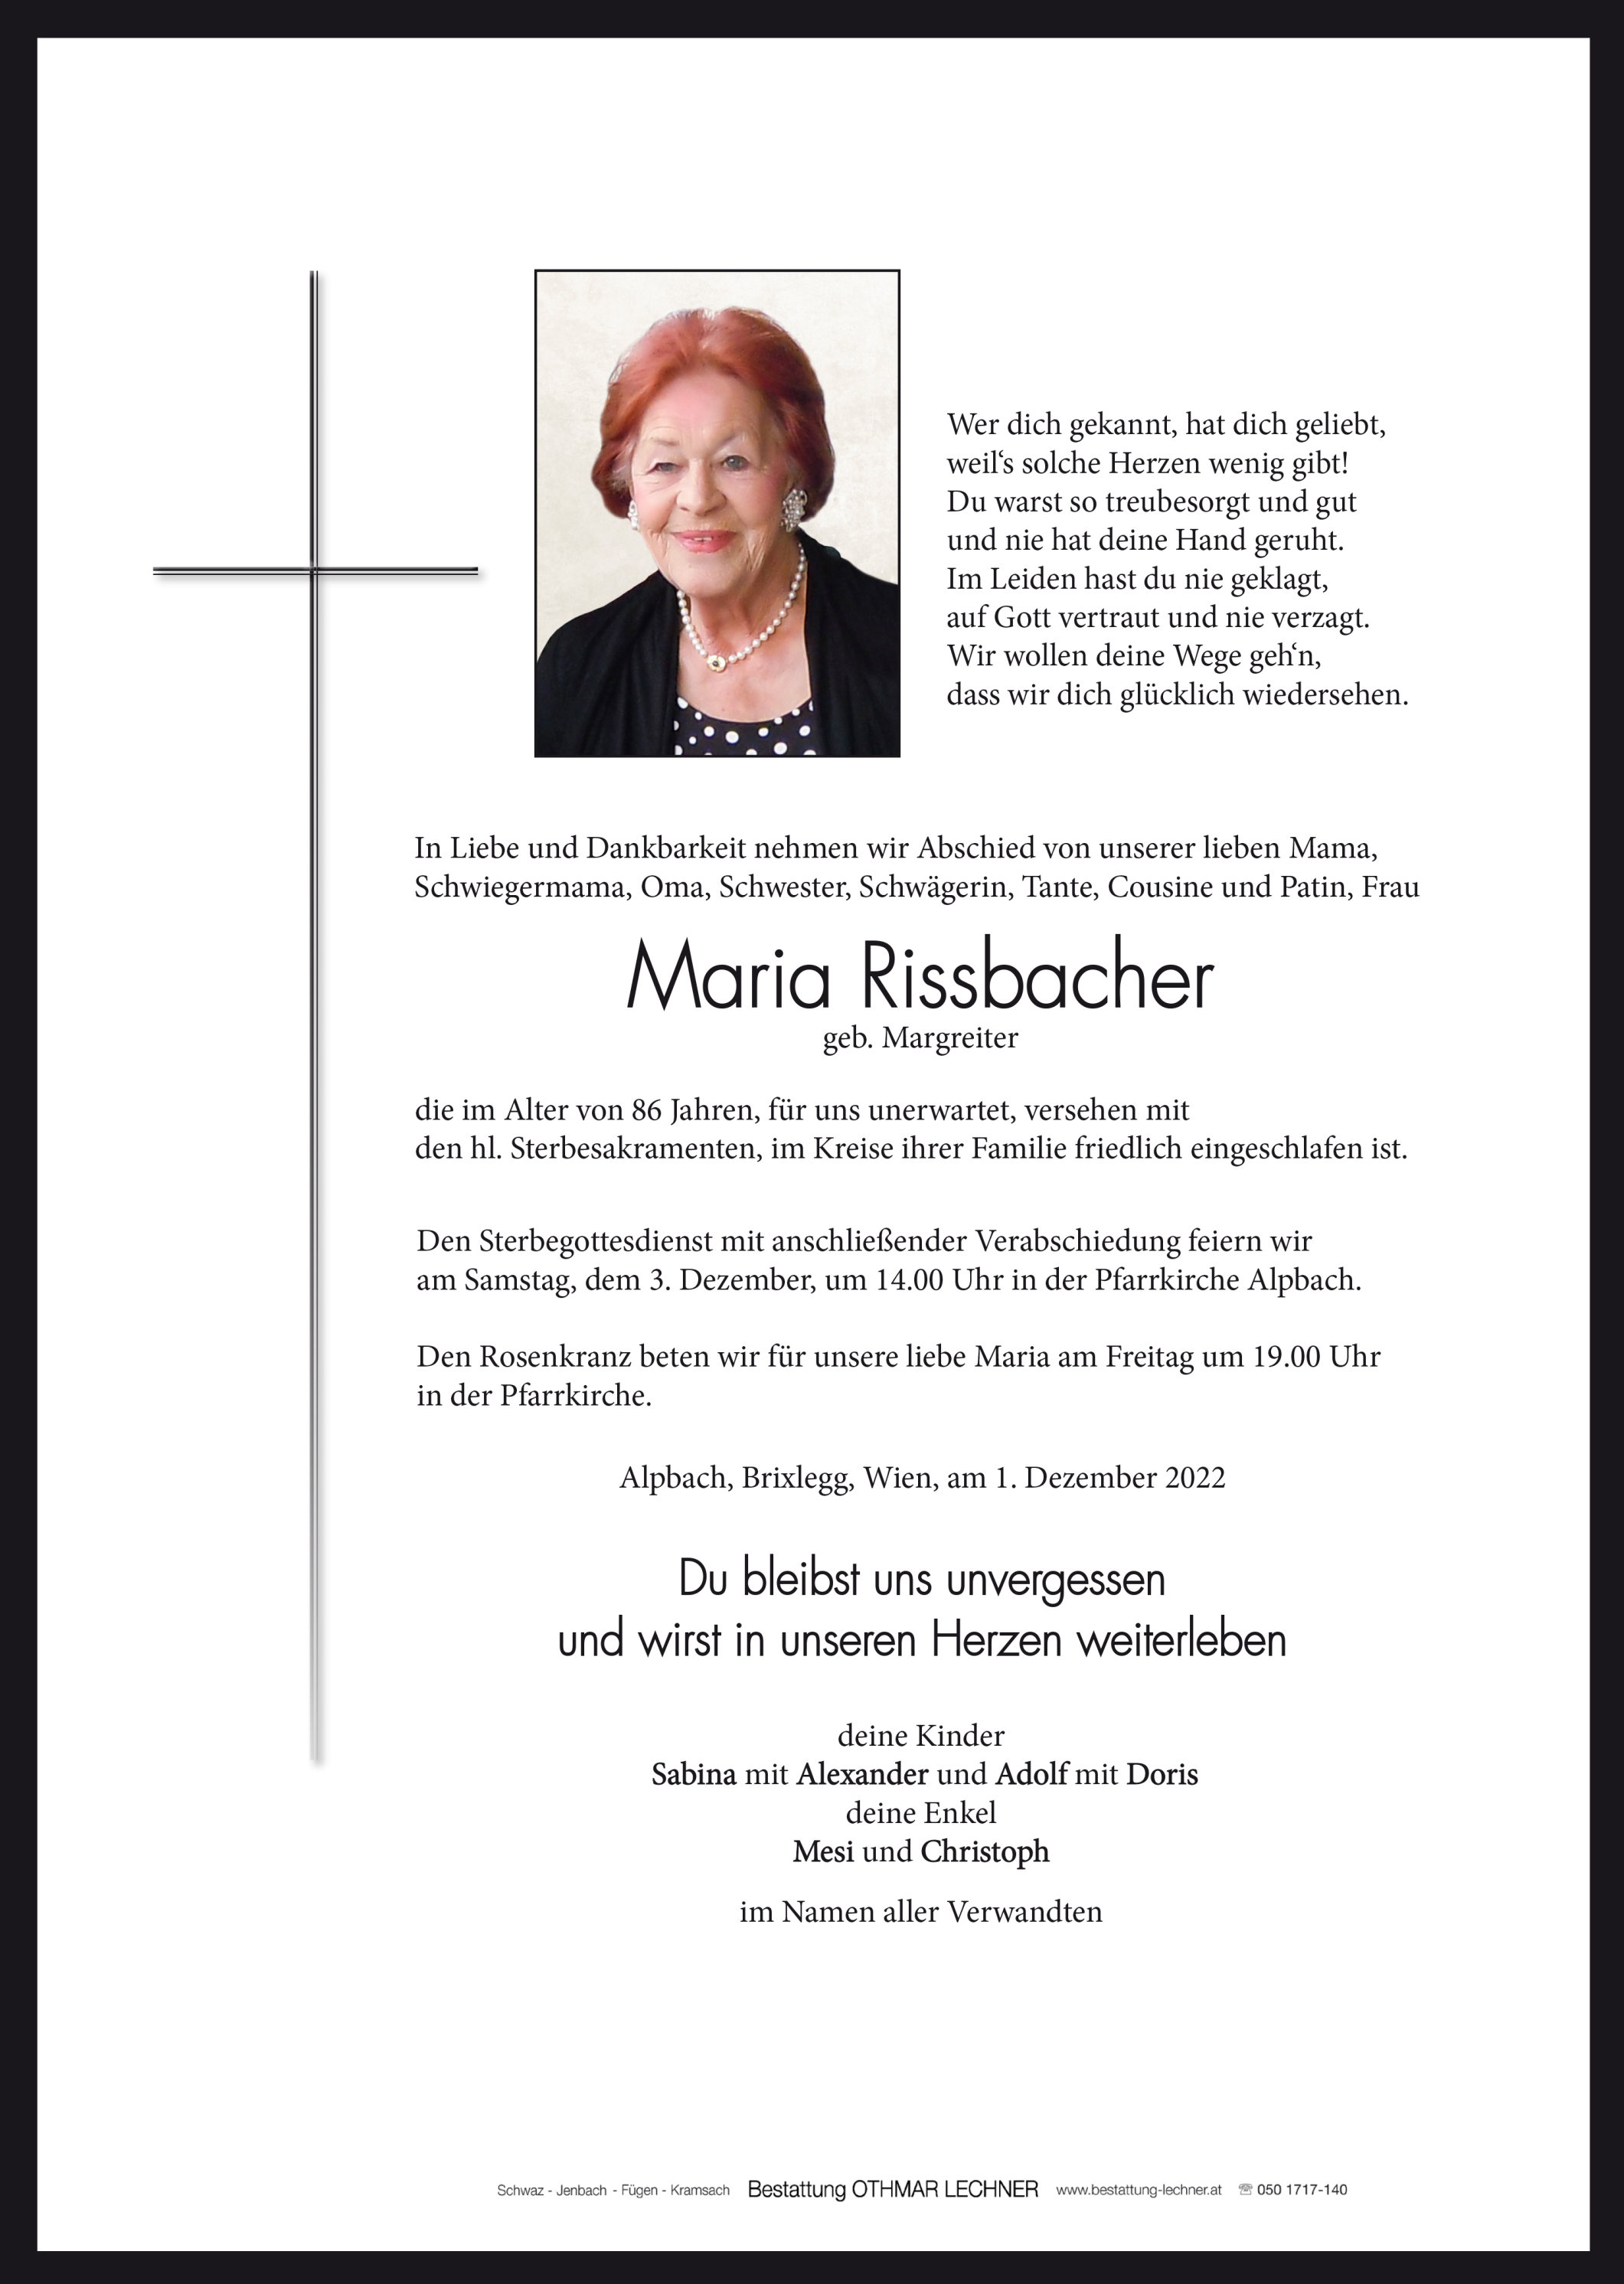 Maria Rissbacher